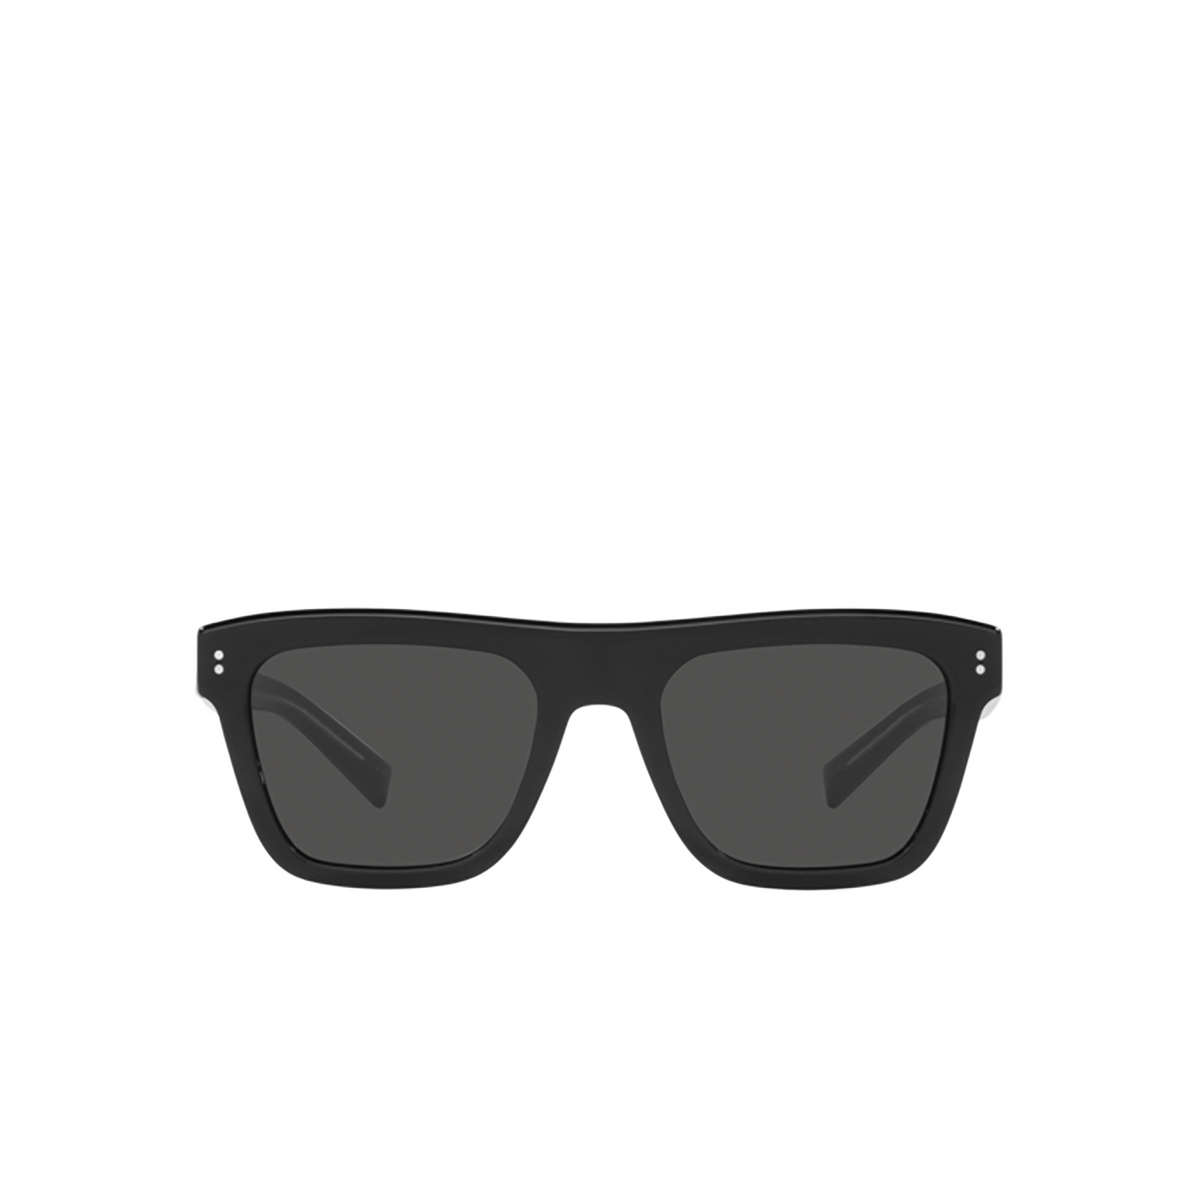 Dolce & Gabbana DG4420 Sunglasses 501/87 Black - front view